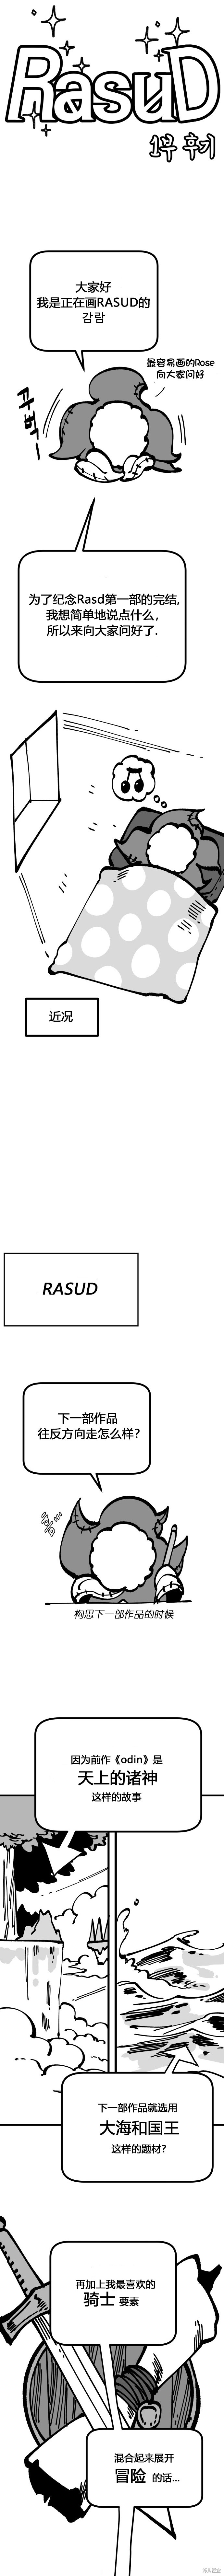 RASUD - 第一季後記 - 1